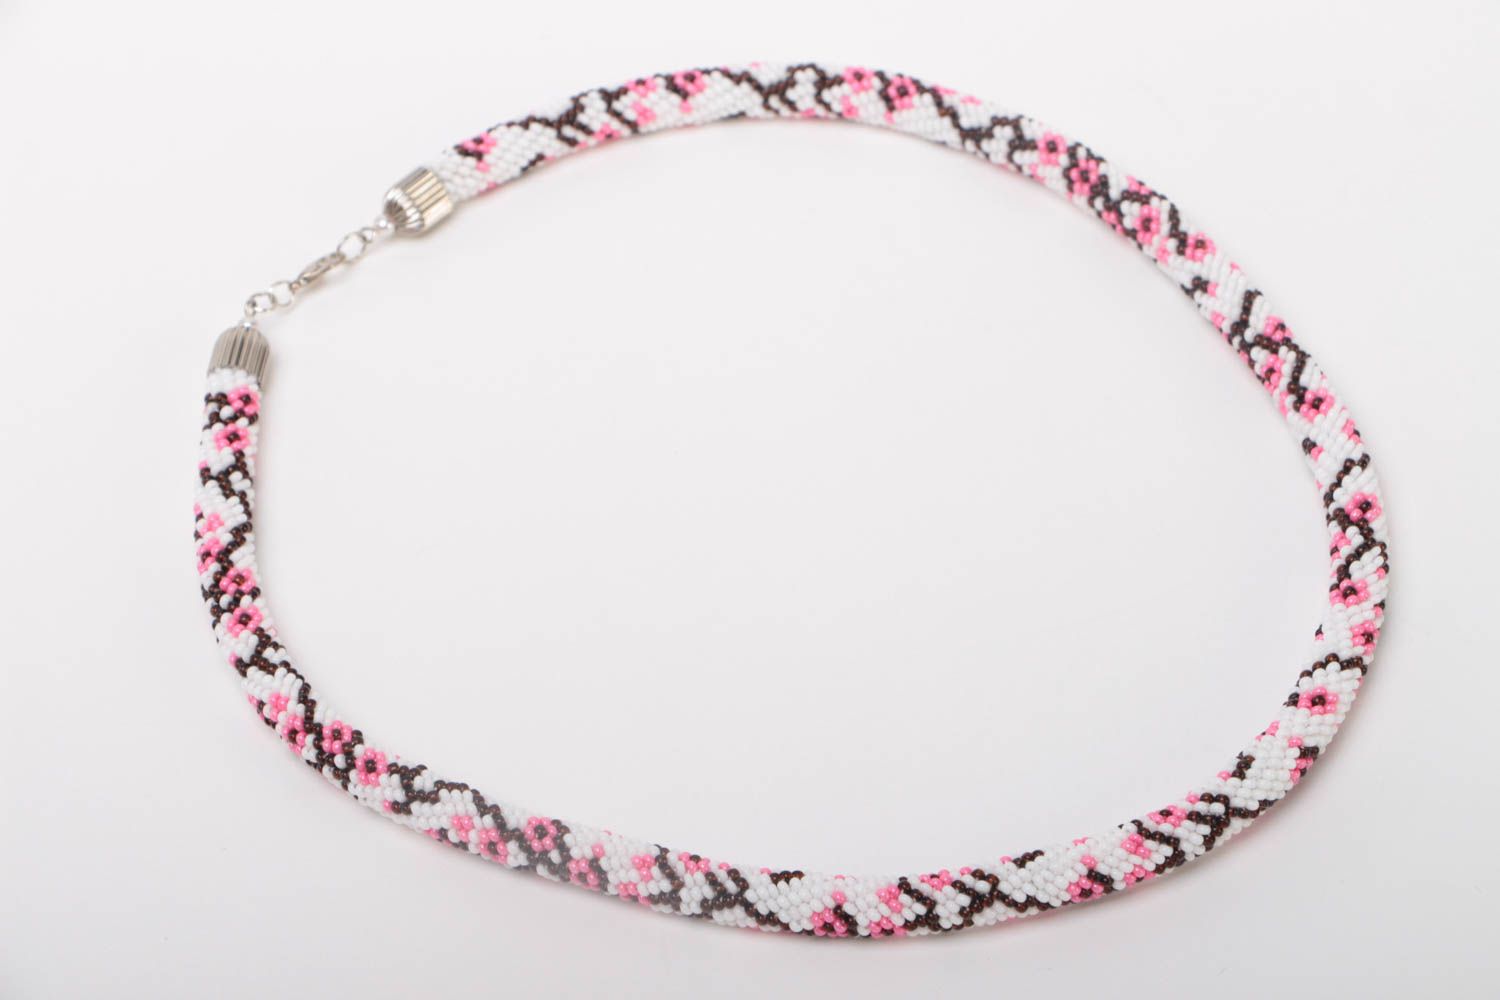 Unusual handmade beaded cord necklace designer fashion jewelry gift ideas photo 2